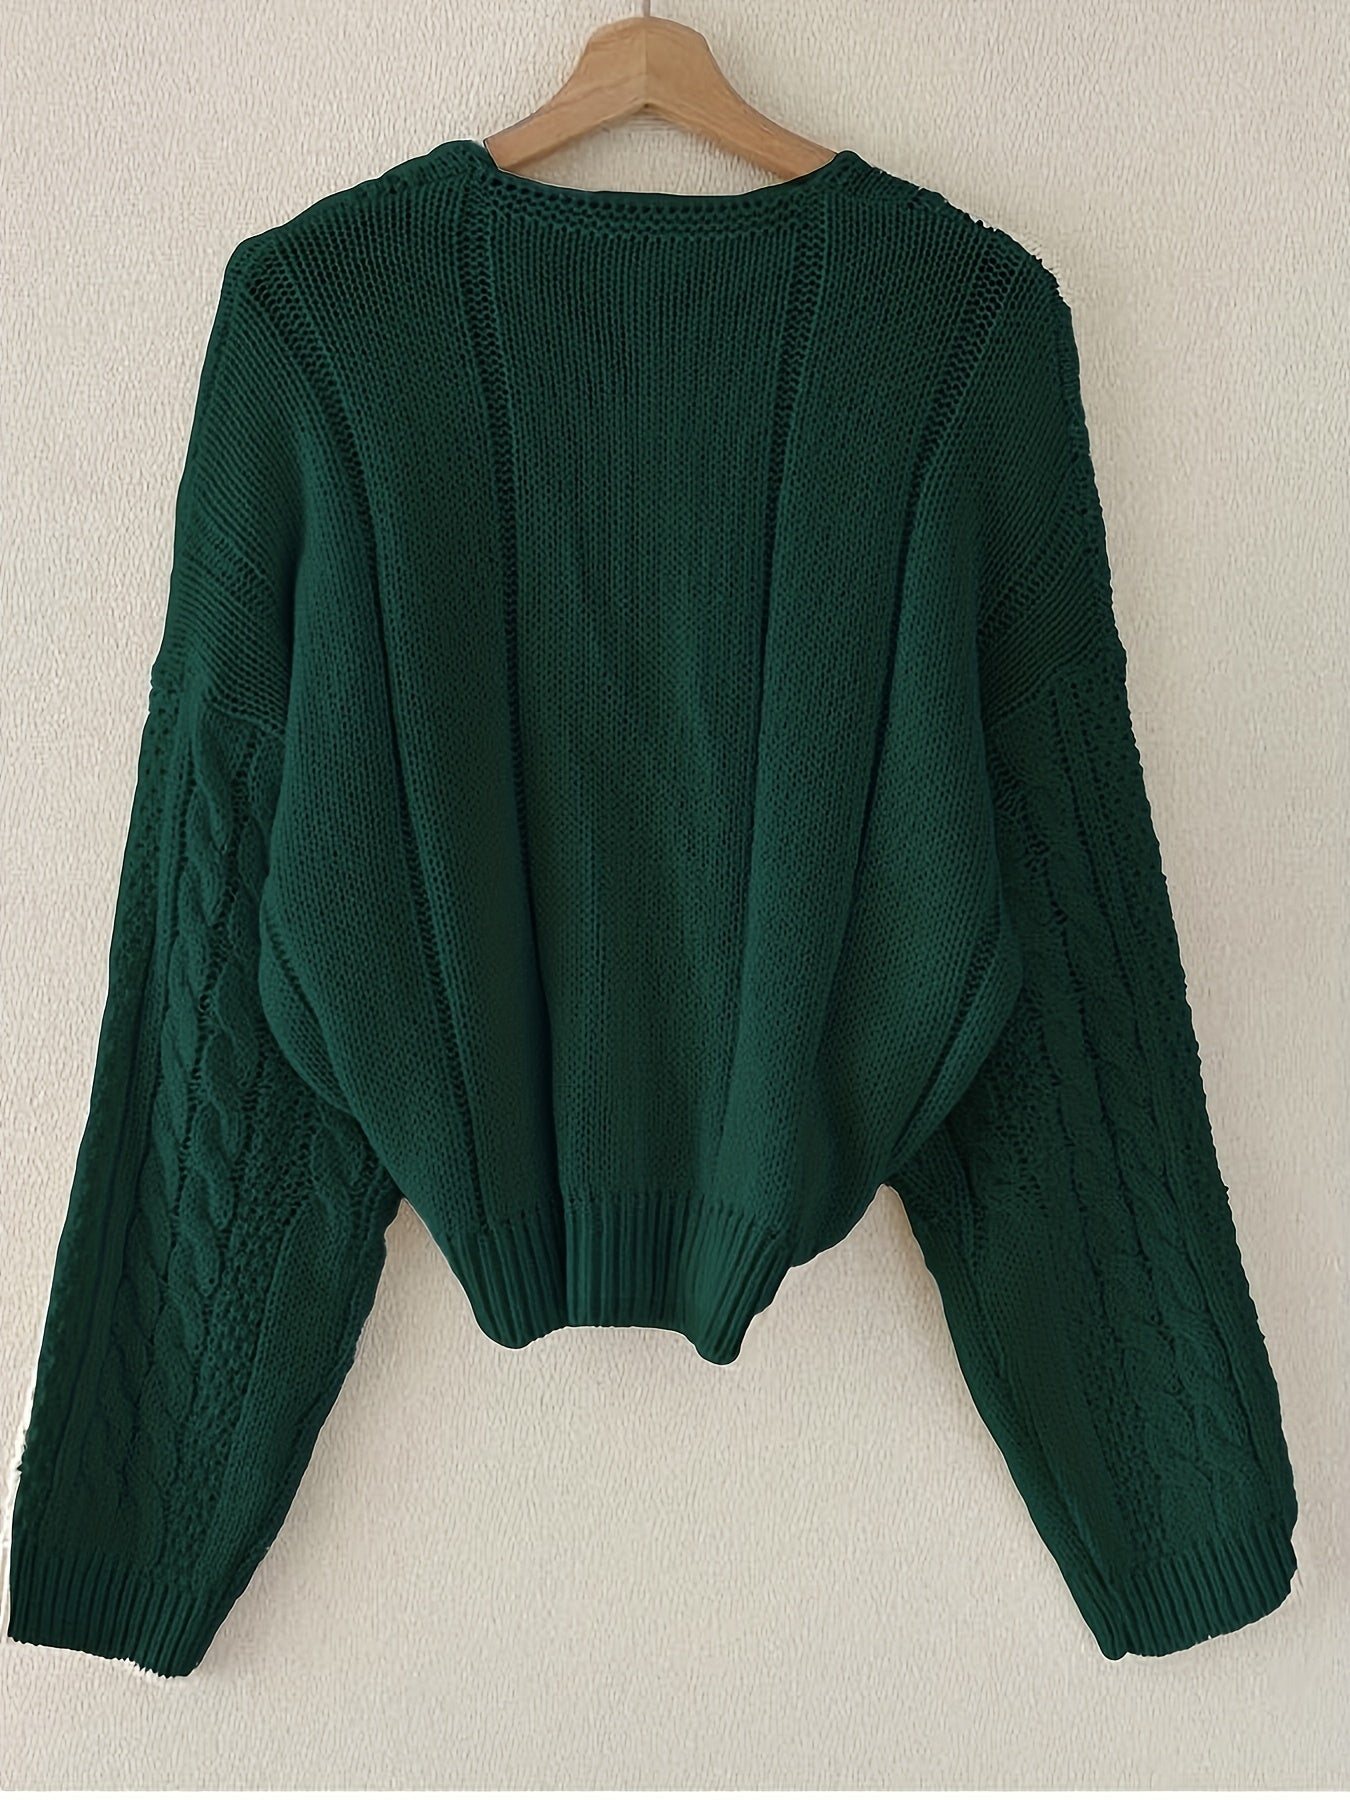 Antmvs Twist Pattern Single Button Knit Cardigan, Casual Surplice Neck Long Sleeve Sweater, Women's Clothing